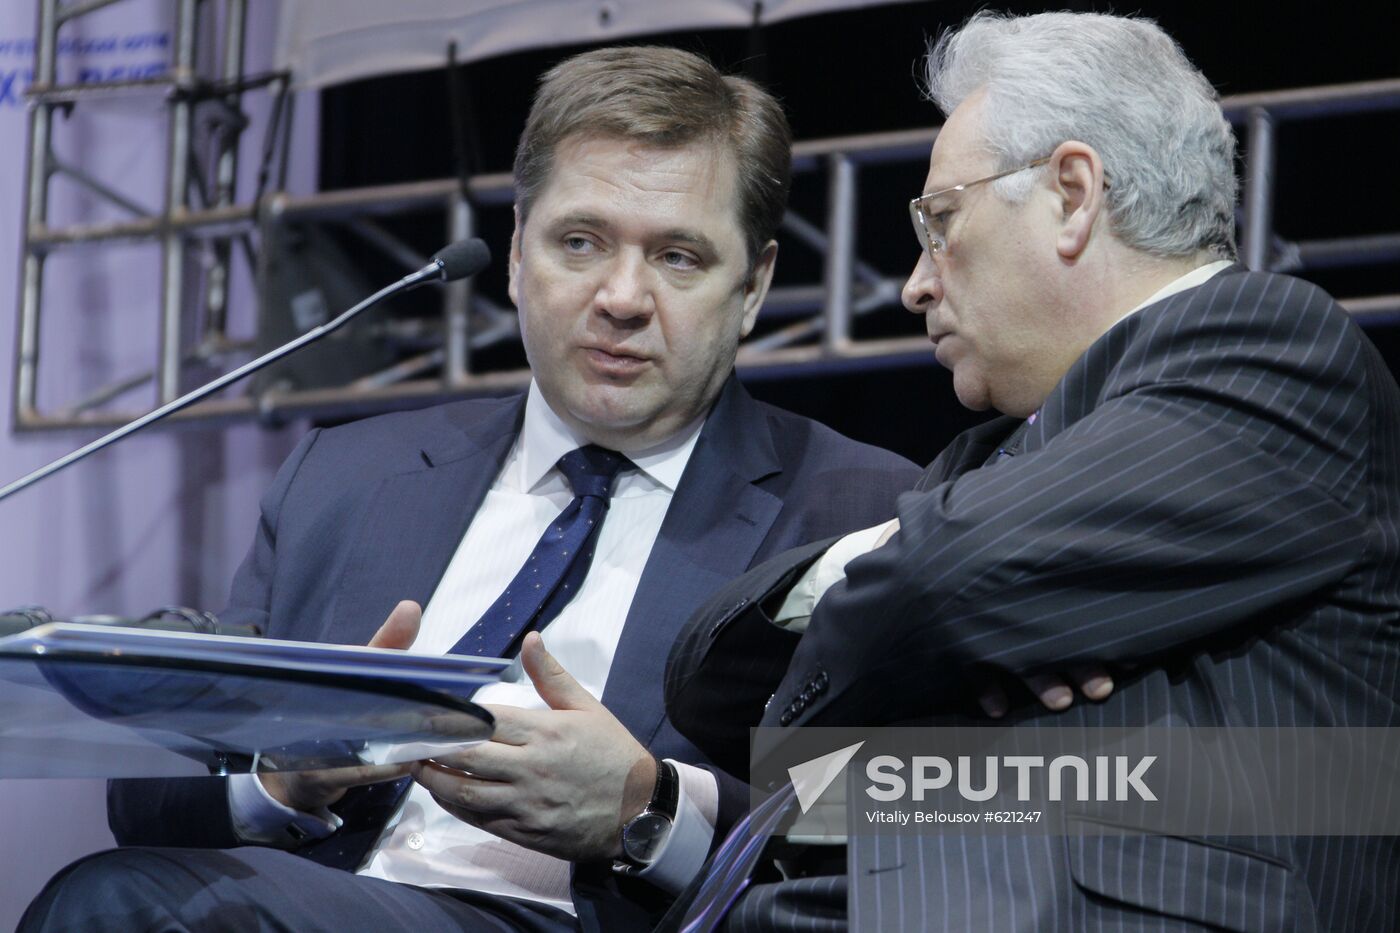 Sergei Shmatko and Yury Lipatov